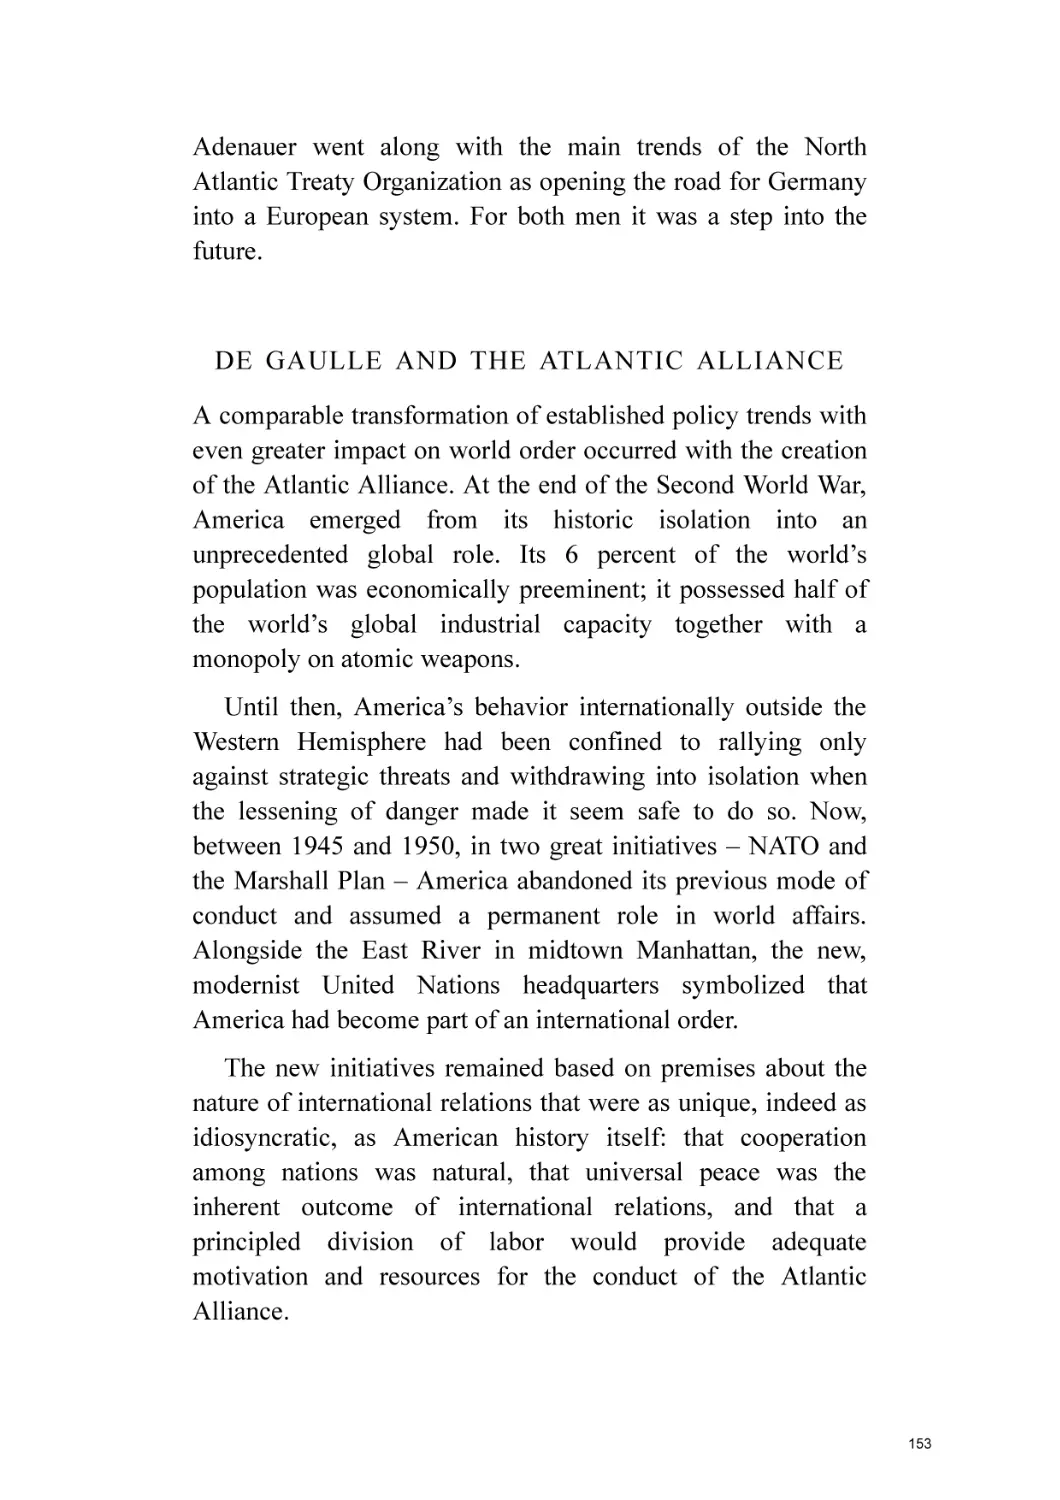 De Gaulle and the Atlantic Alliance